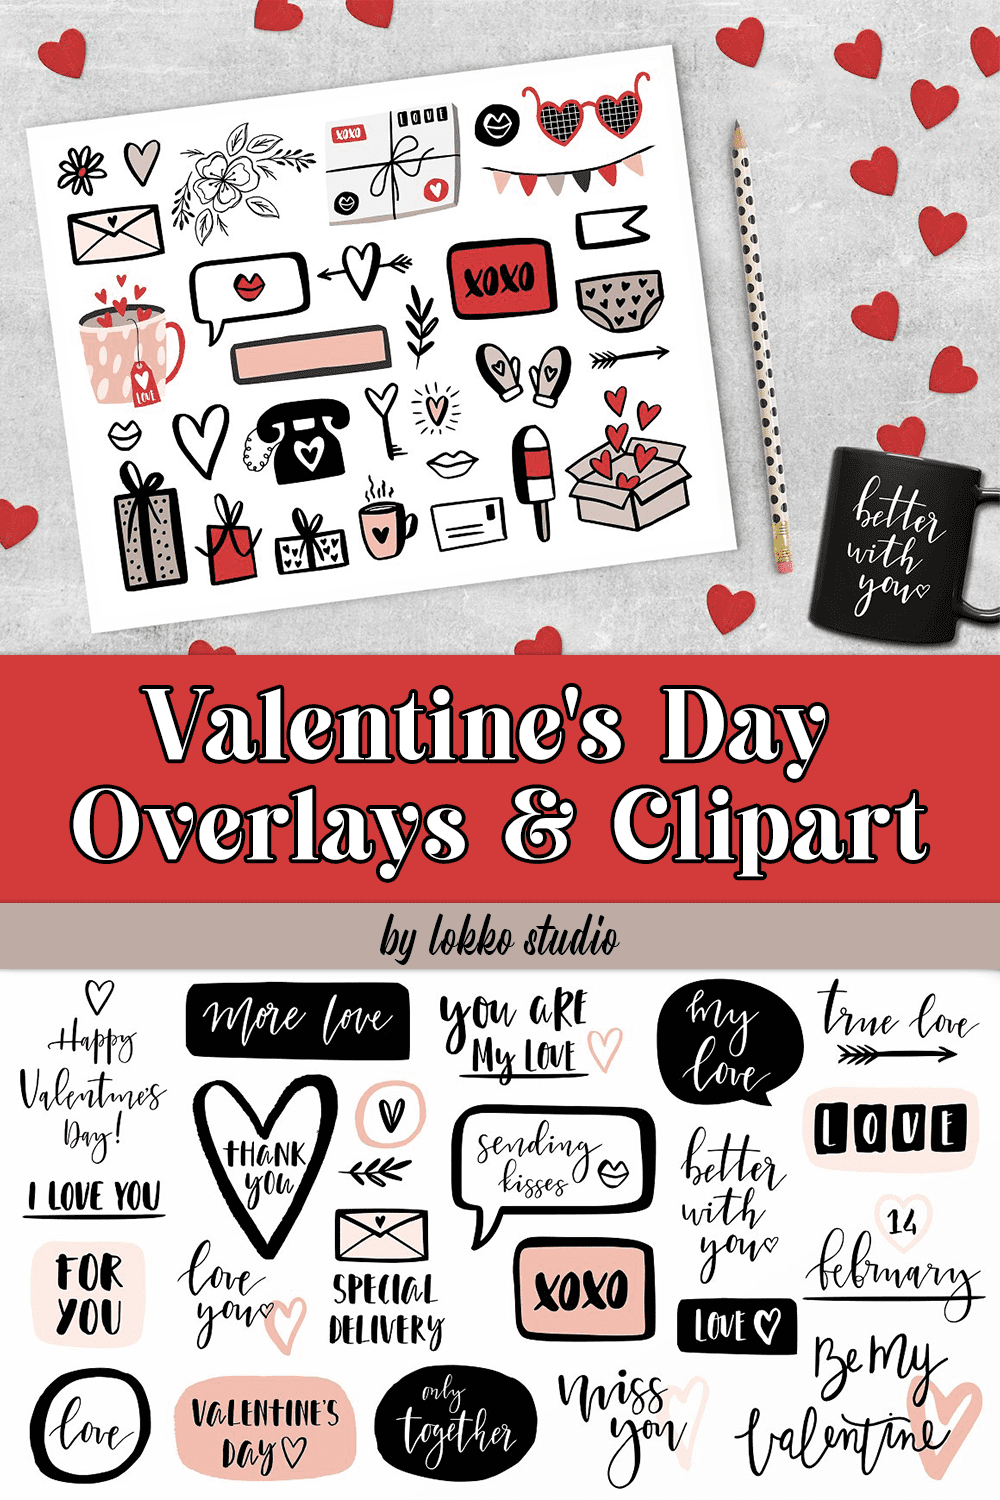 Valentine's Day Overlays & Clipart - Pinterest.